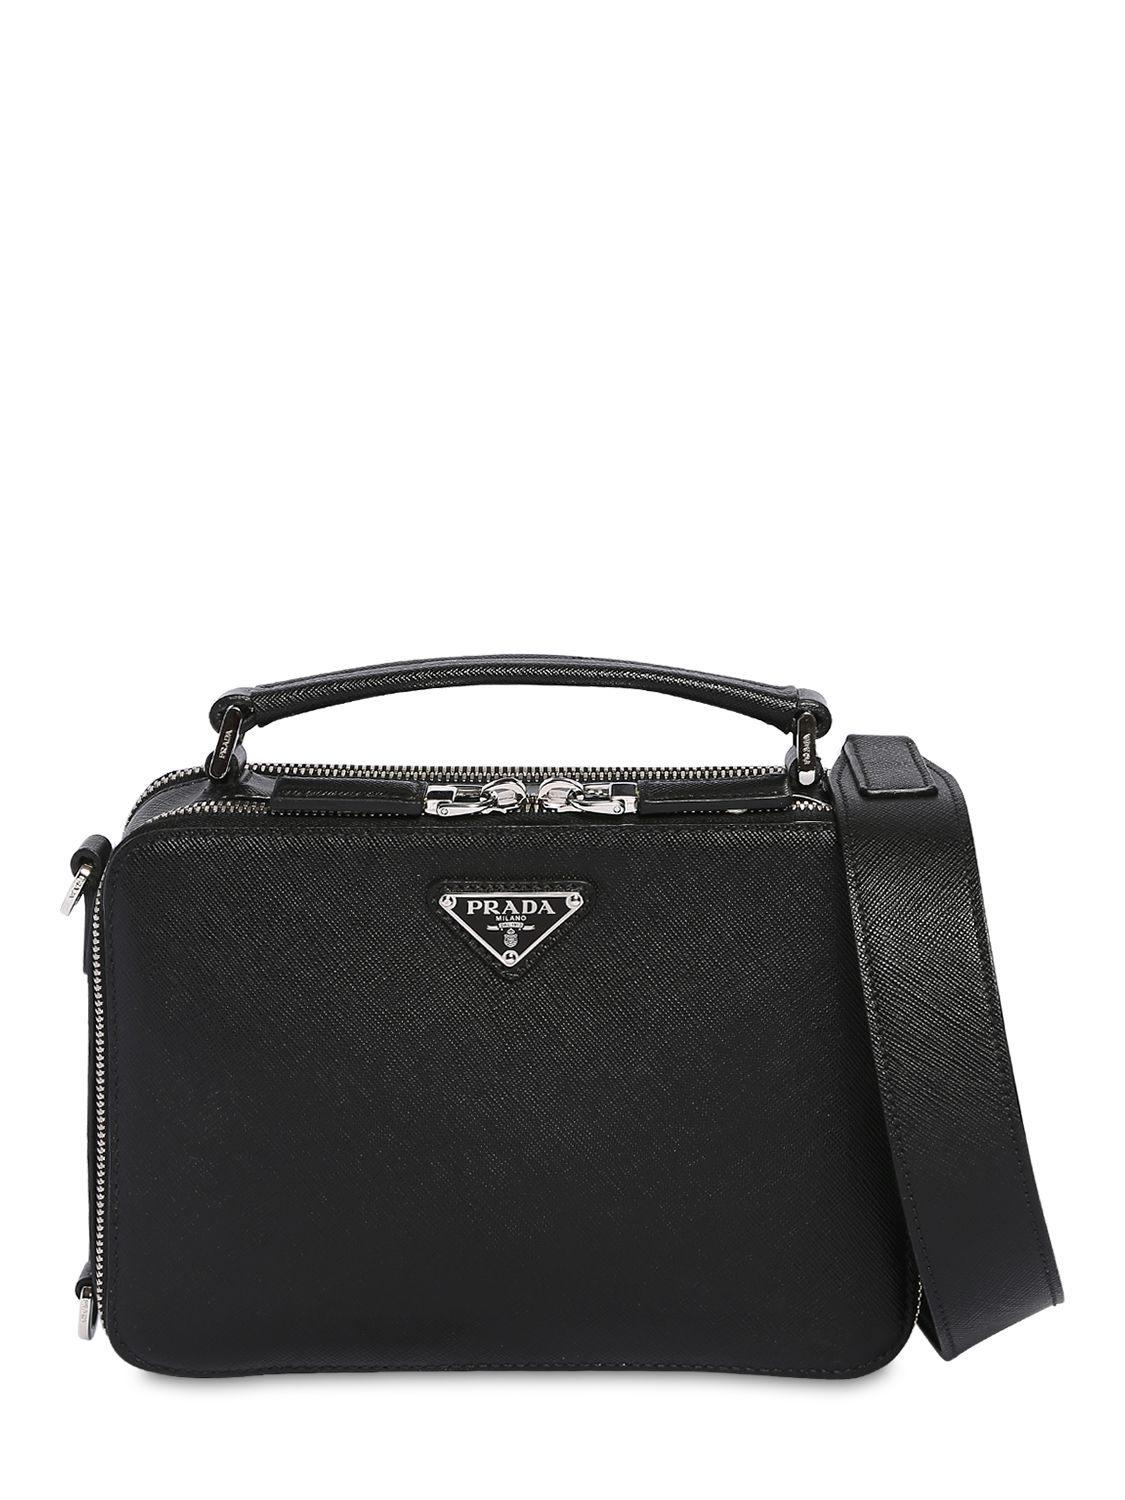 Prada Saffiano Leather Travel Bag in Black for Men | Lyst